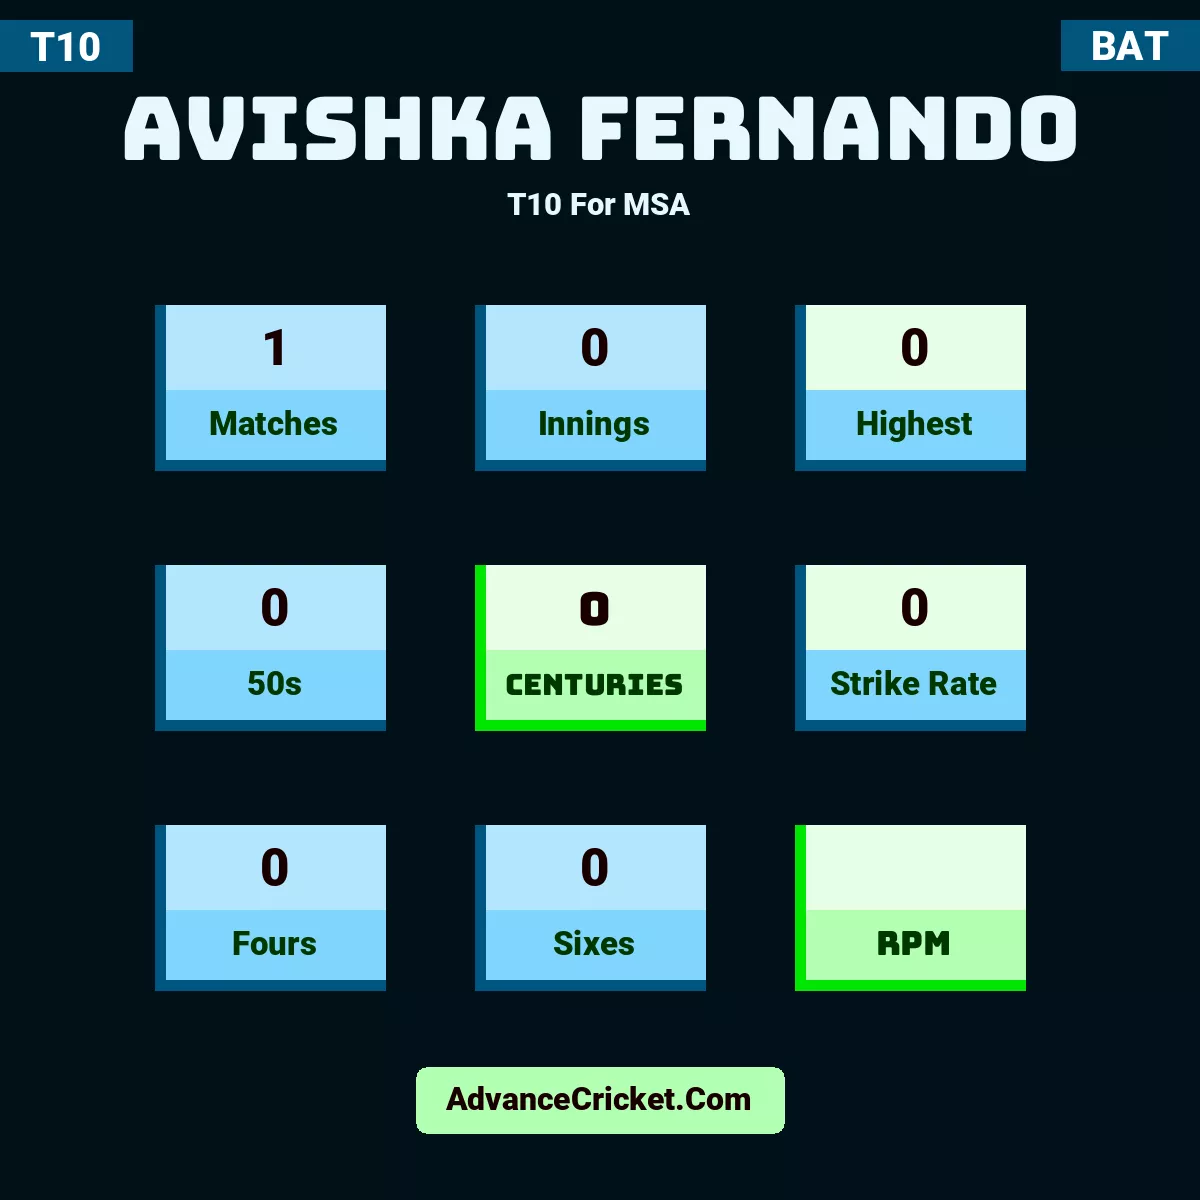 Avishka Fernando T10  For MSA, Avishka Fernando played 1 matches, scored 0 runs as highest, 0 half-centuries, and 0 centuries, with a strike rate of 0. A.Fernando hit 0 fours and 0 sixes.